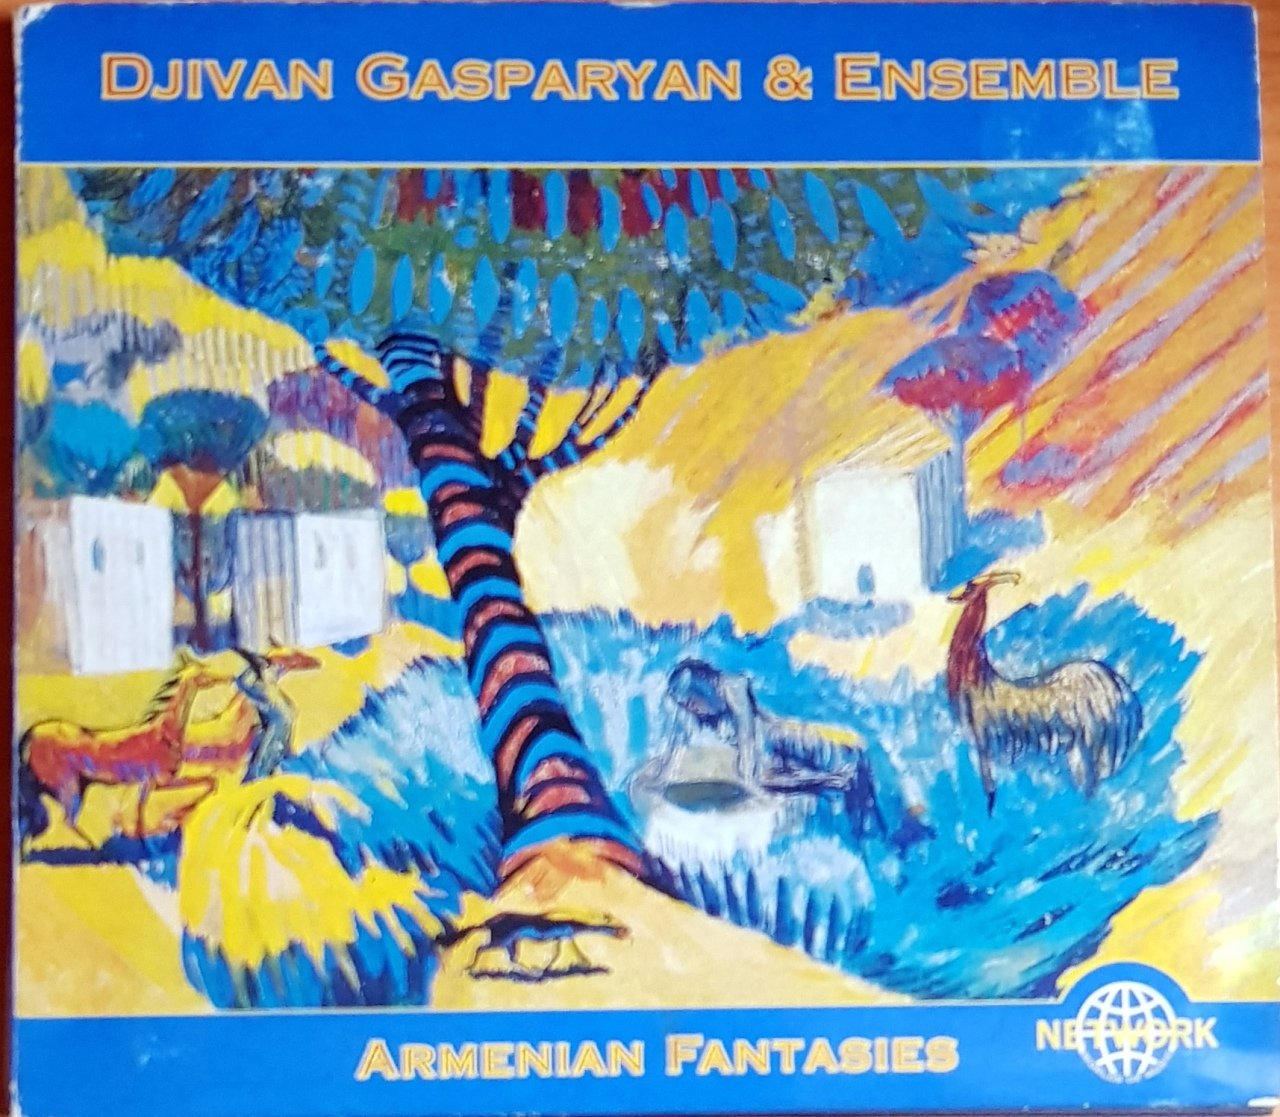 DJIVAN GASPARYAN & ENSEMBLE - ARMENIAN FANTASIES (2000) NETWORK CD 2.EL